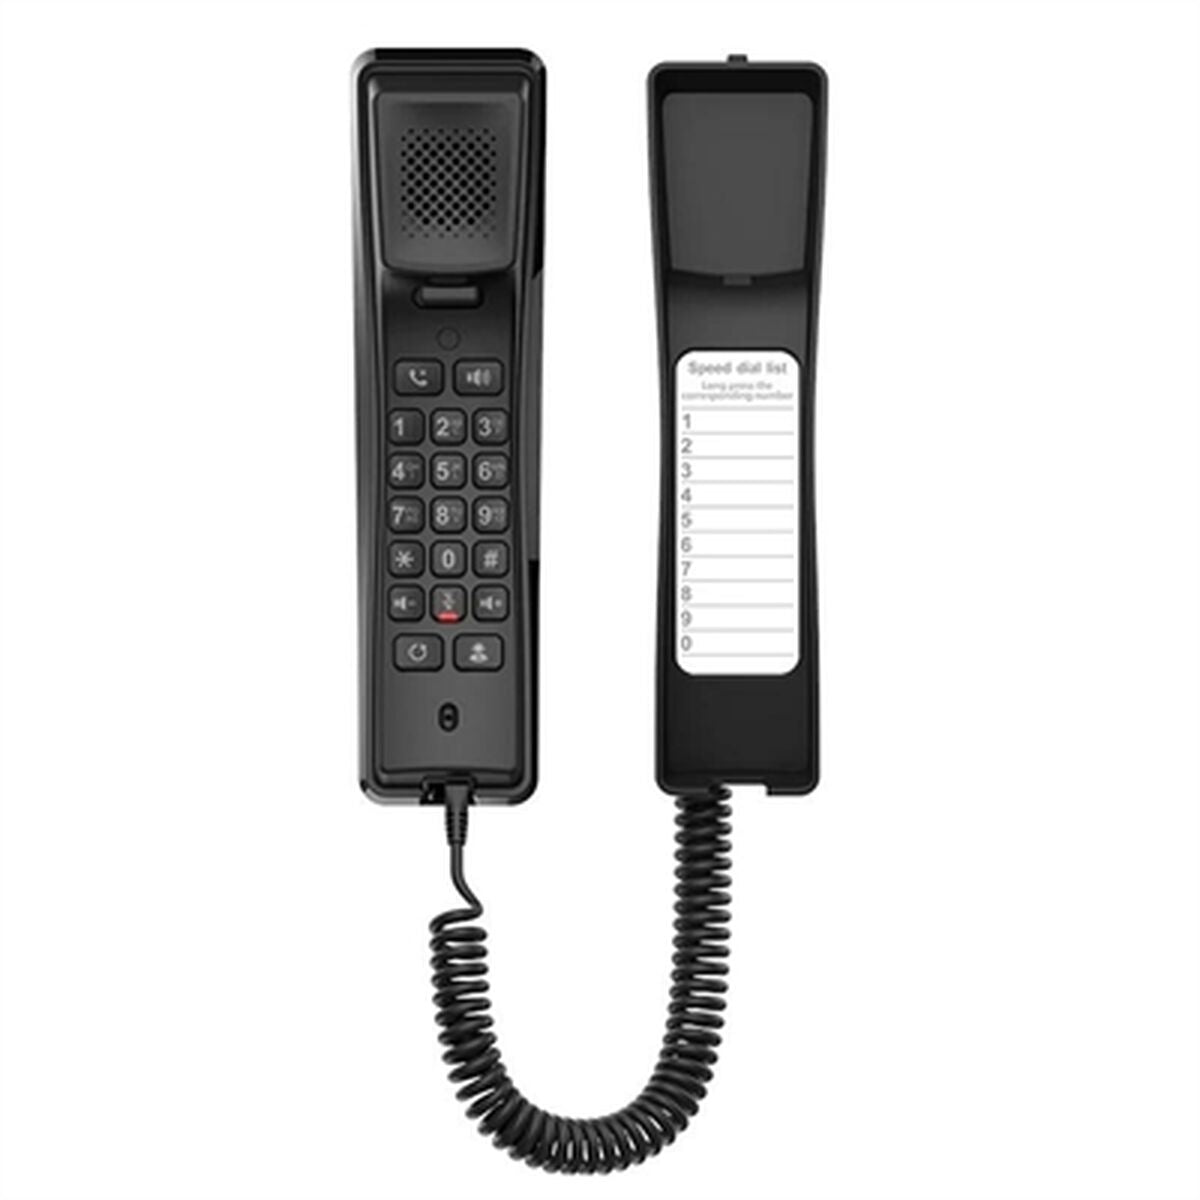 Landline Telephone Fanvil H2U V2 Black, Fanvil, Electronics, Landline telephones and accessories, landline-telephone-fanvil-h2u-v2-black, Brand_Fanvil, category-reference-2609, category-reference-2617, category-reference-2619, category-reference-t-18372, category-reference-t-19653, Condition_NEW, office, Price_50 - 100, telephones & tablets, Teleworking, RiotNook